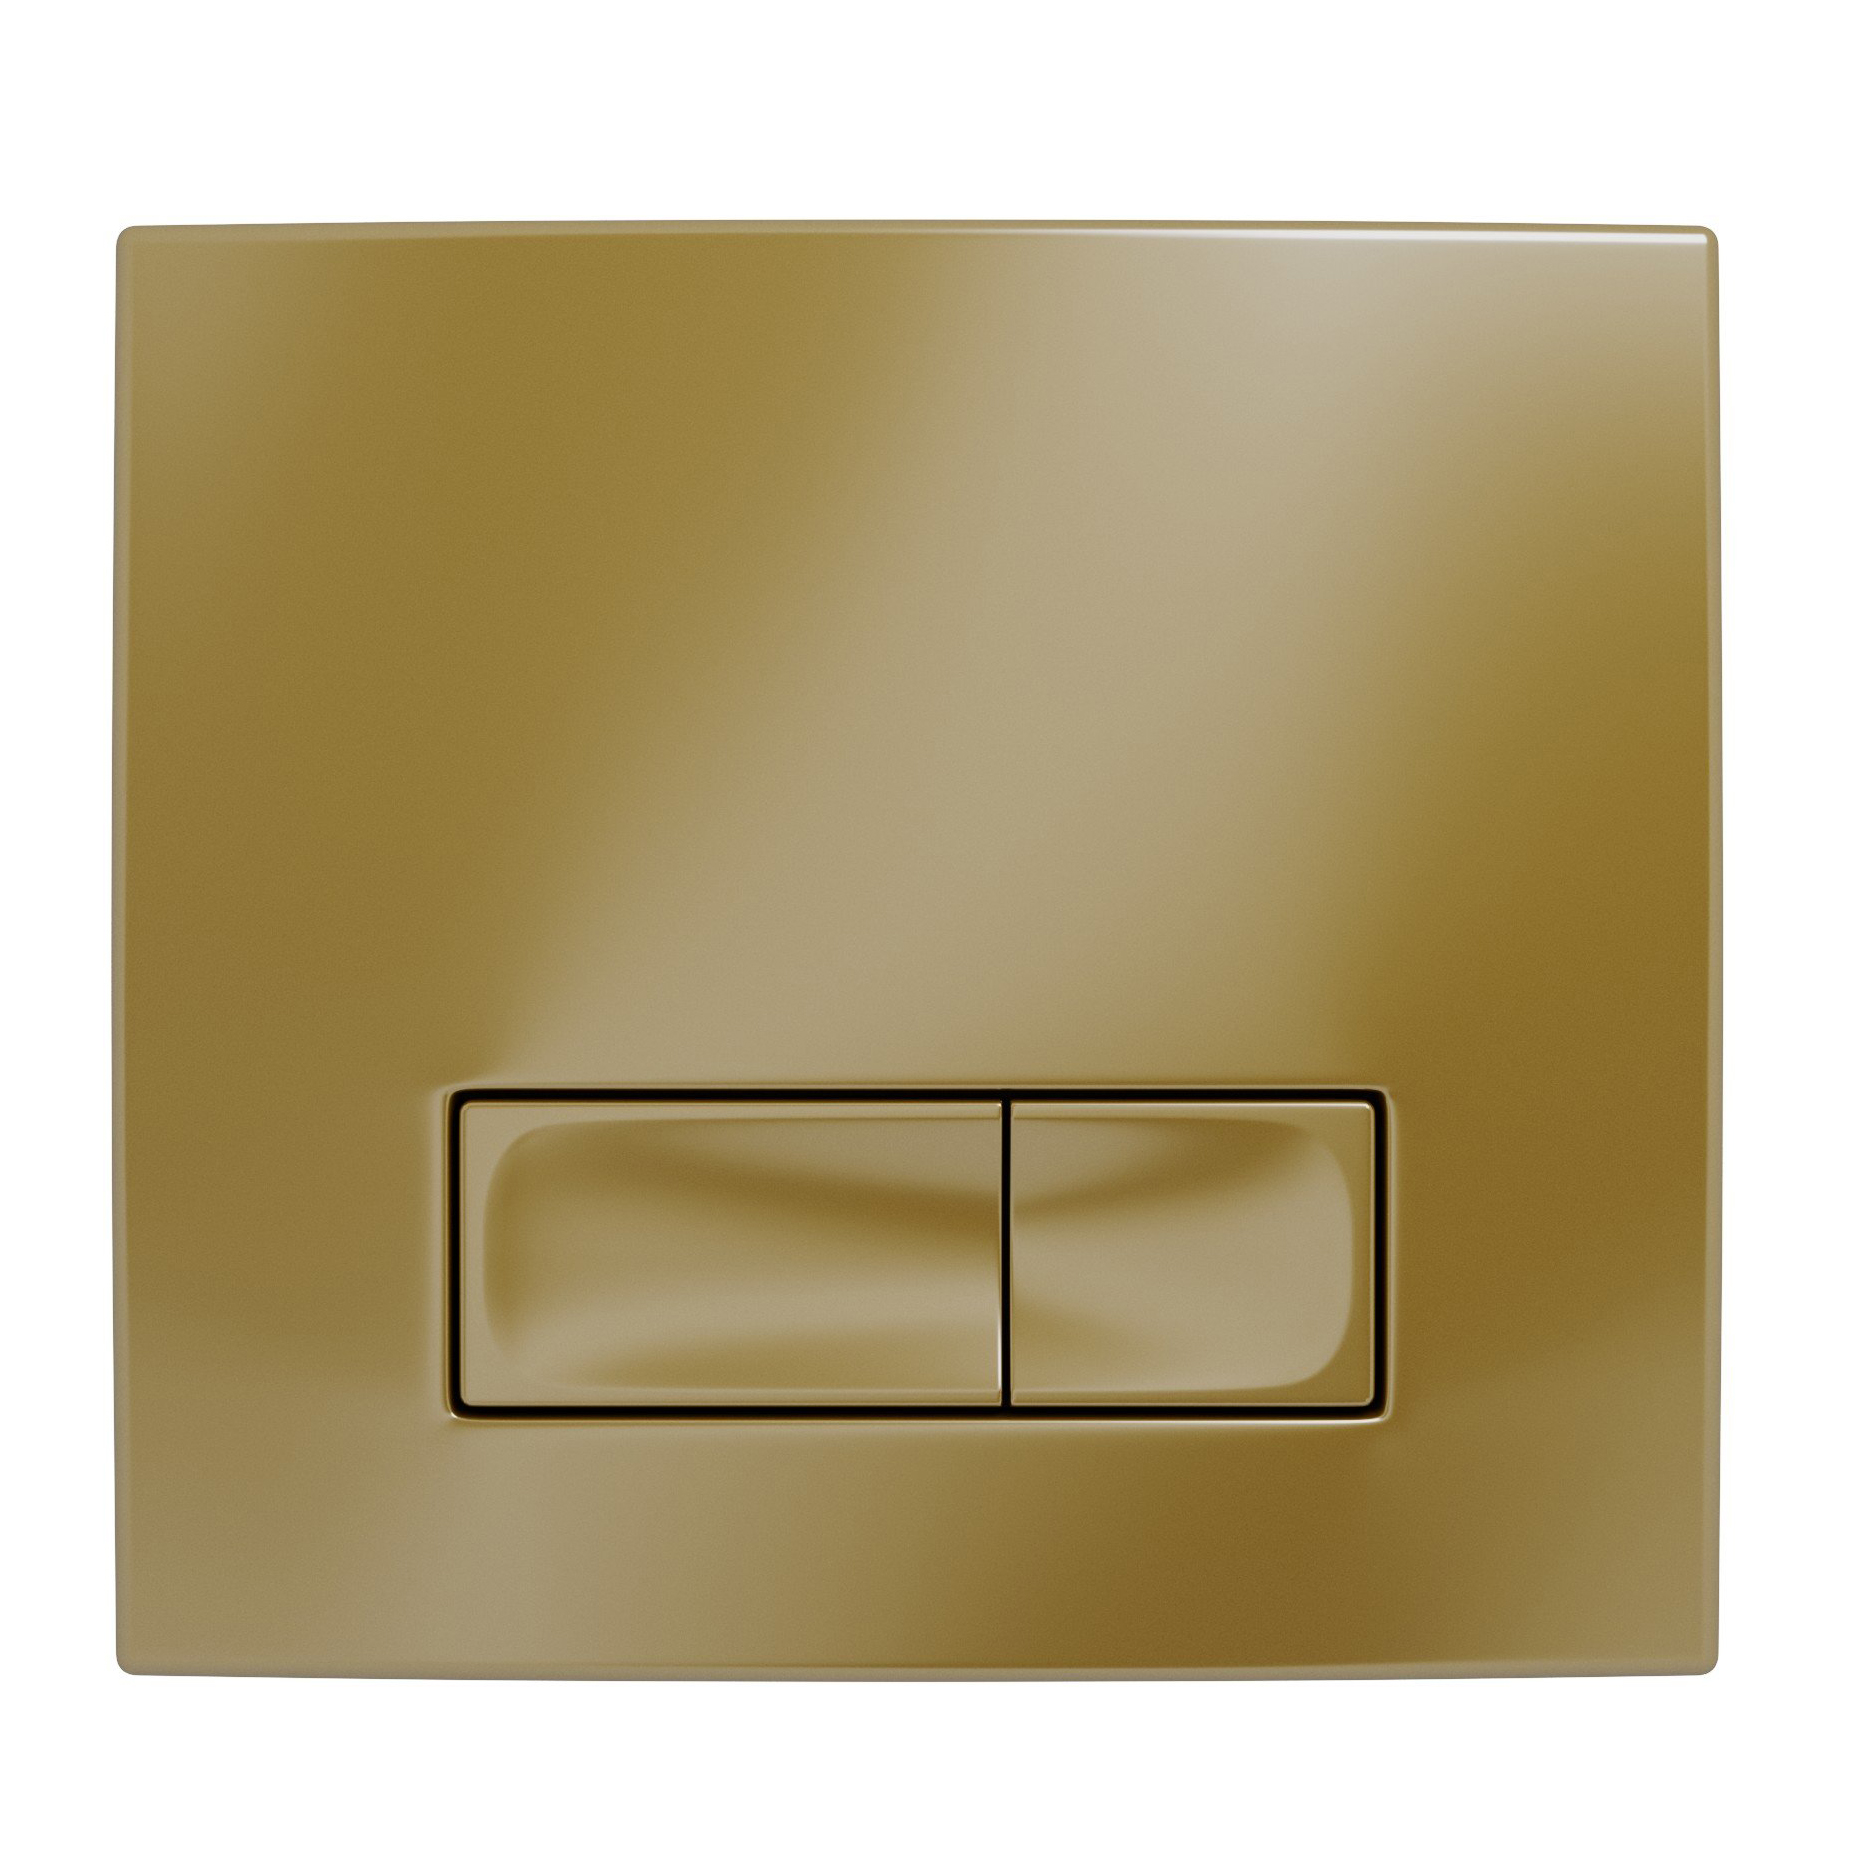 Кнопка для инсталляции Grossman Classic 800.Т1.04.310.310 золото кнопка для инсталляции alcaplast m1745 золото